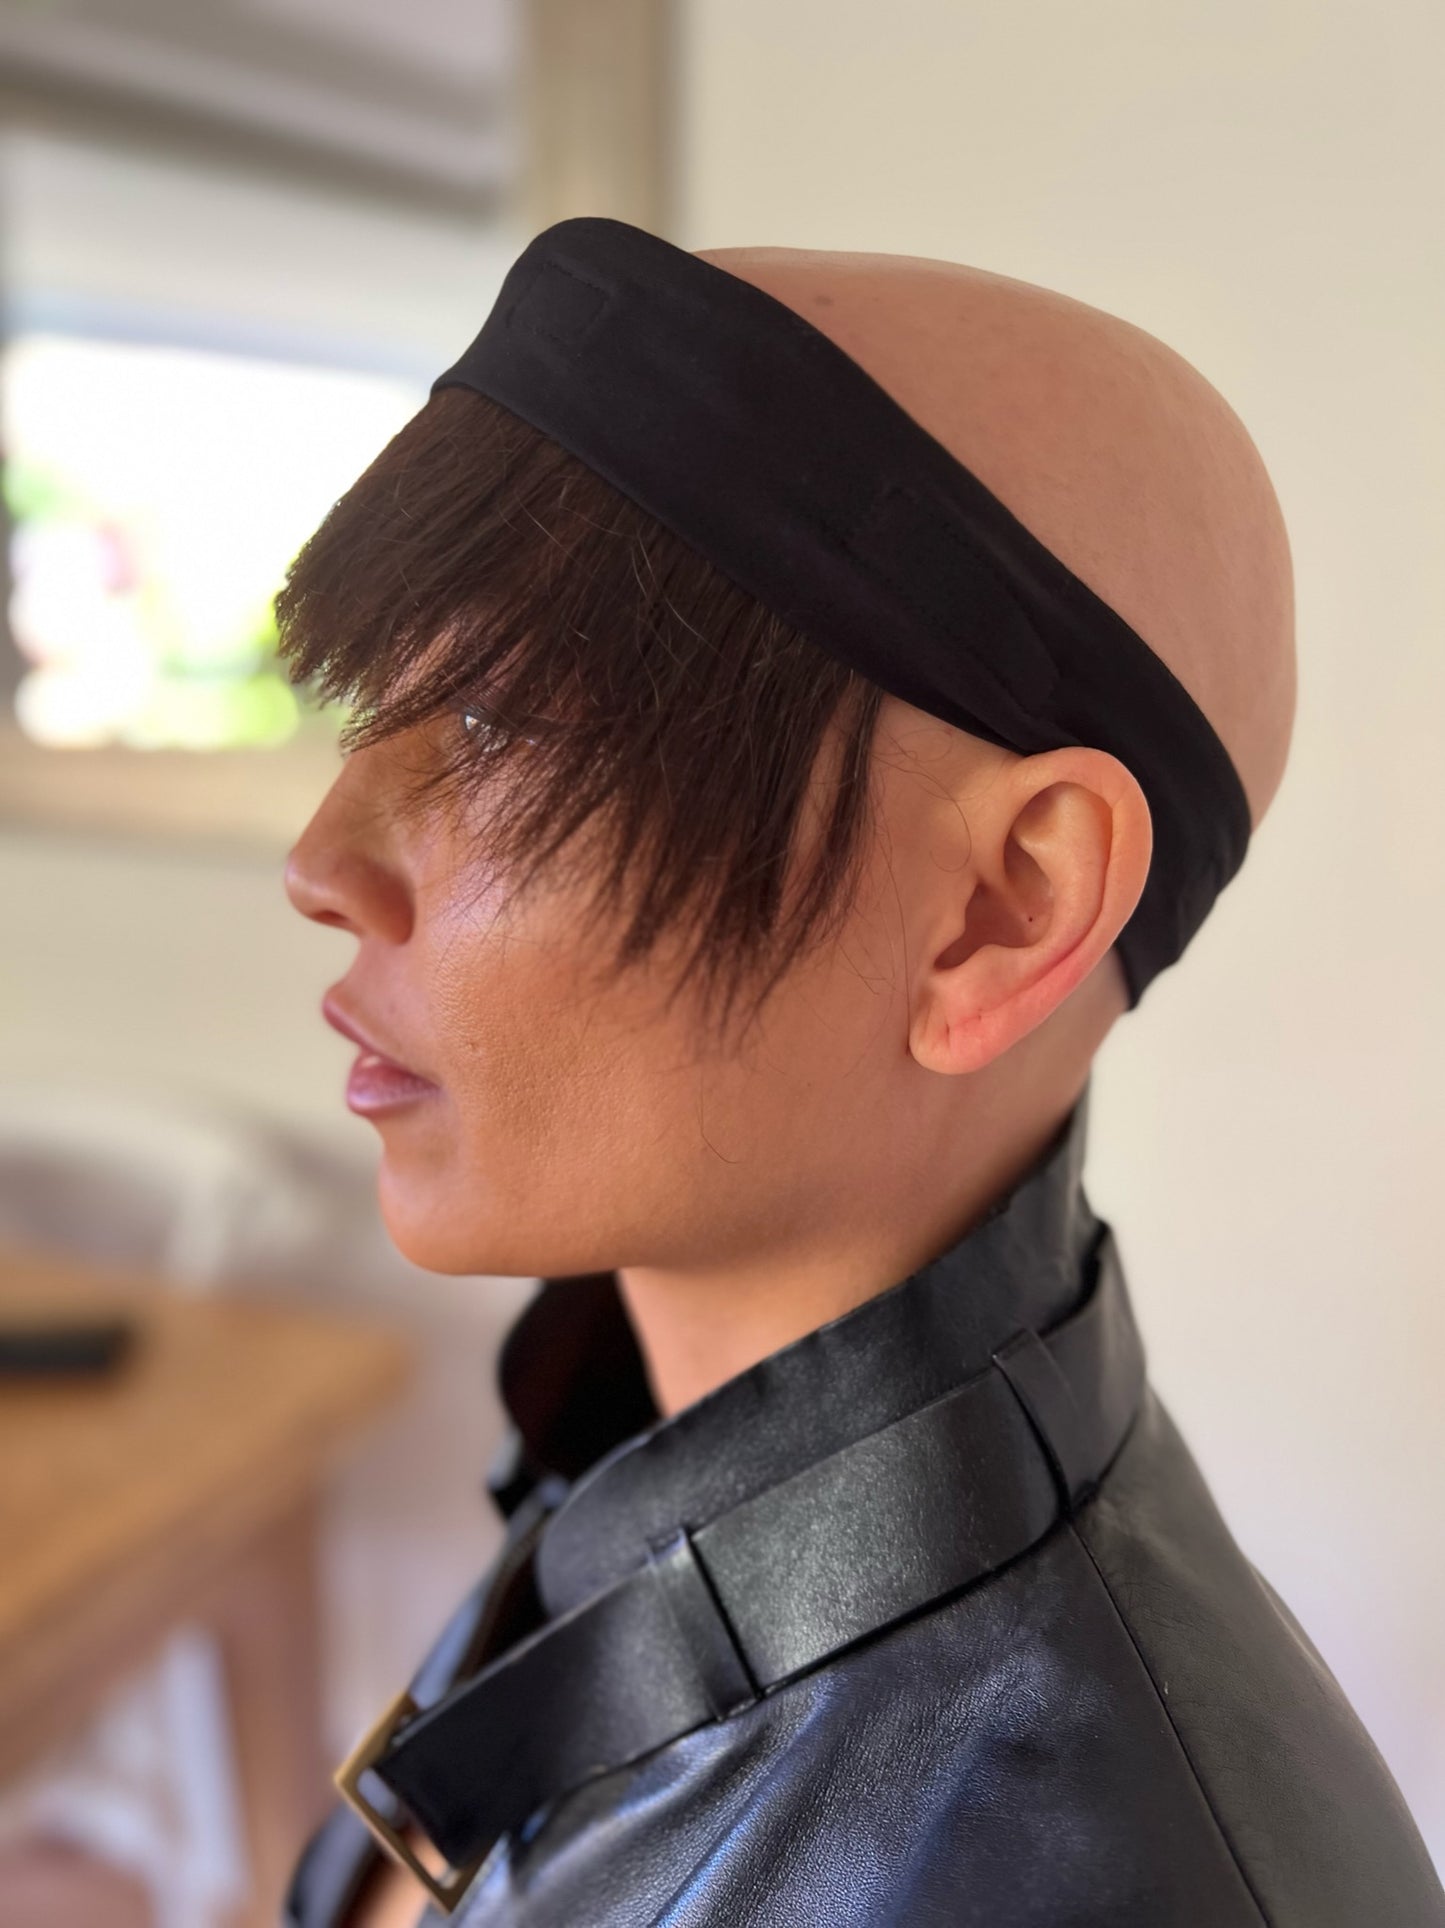 Human Hair Fringe for Under Hats - Short, Dark Brown